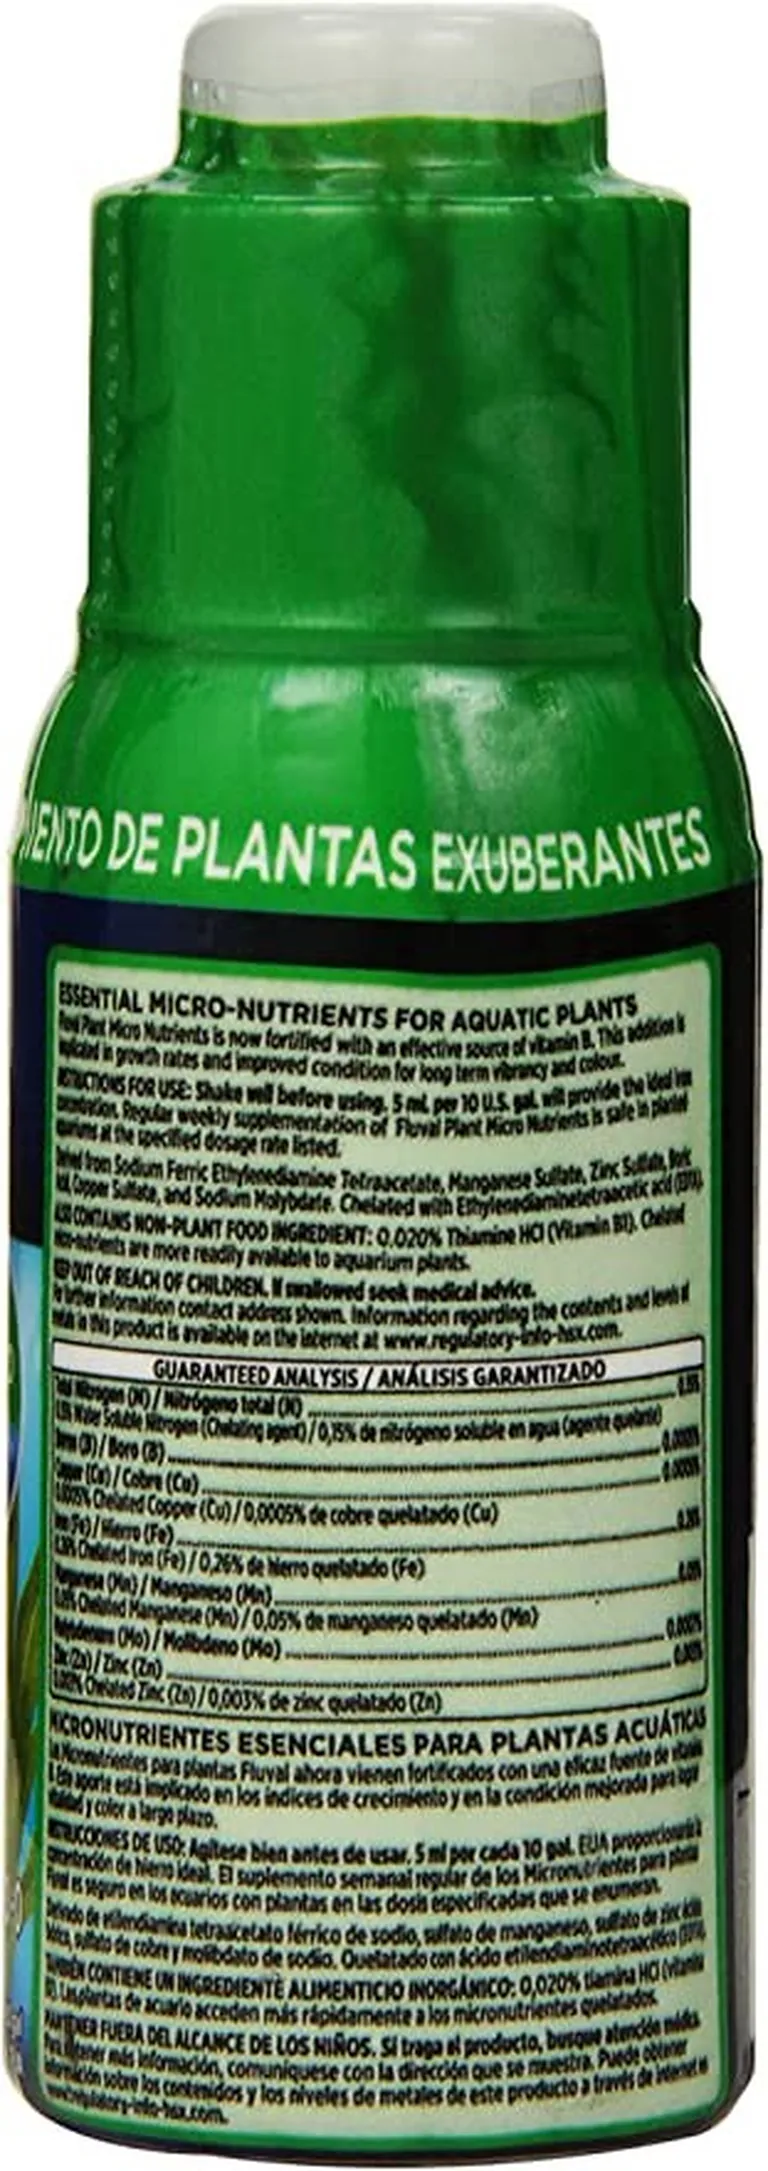 Fluval Plant Micro Nutrients Lush Plant Growth Replenishes Essential Nutrients for Aquarium Plants Photo 2